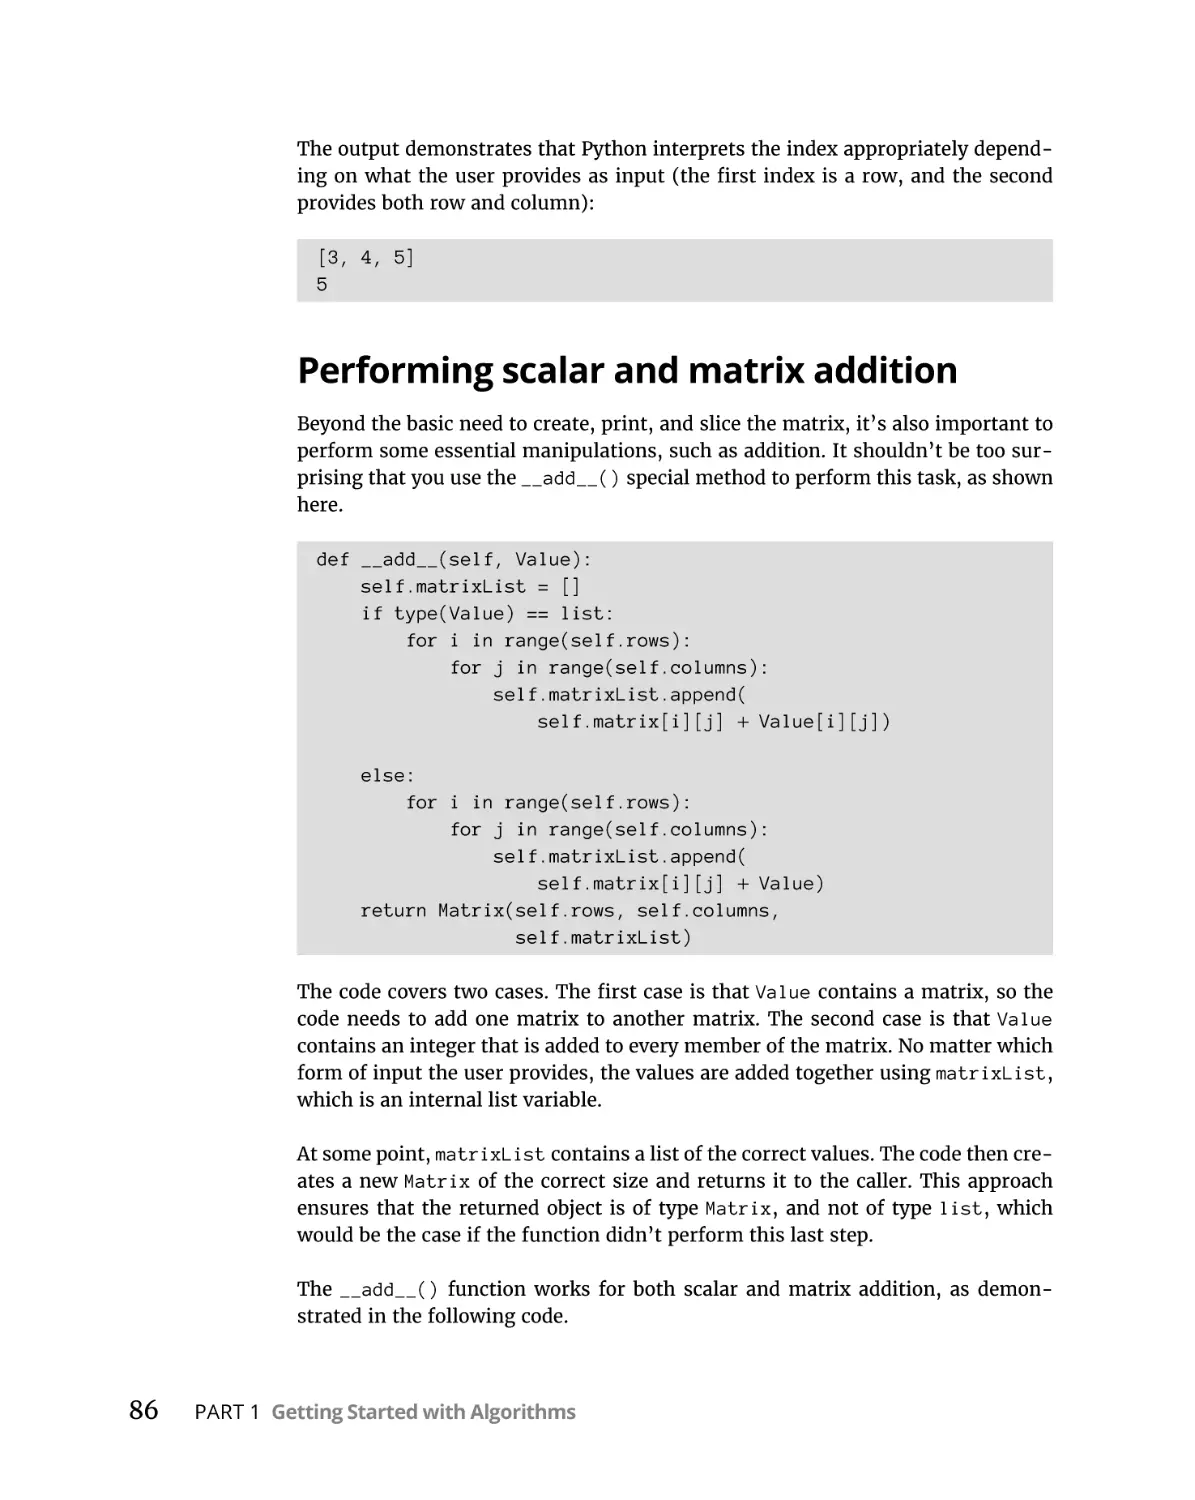 Performing scalar and matrix addition